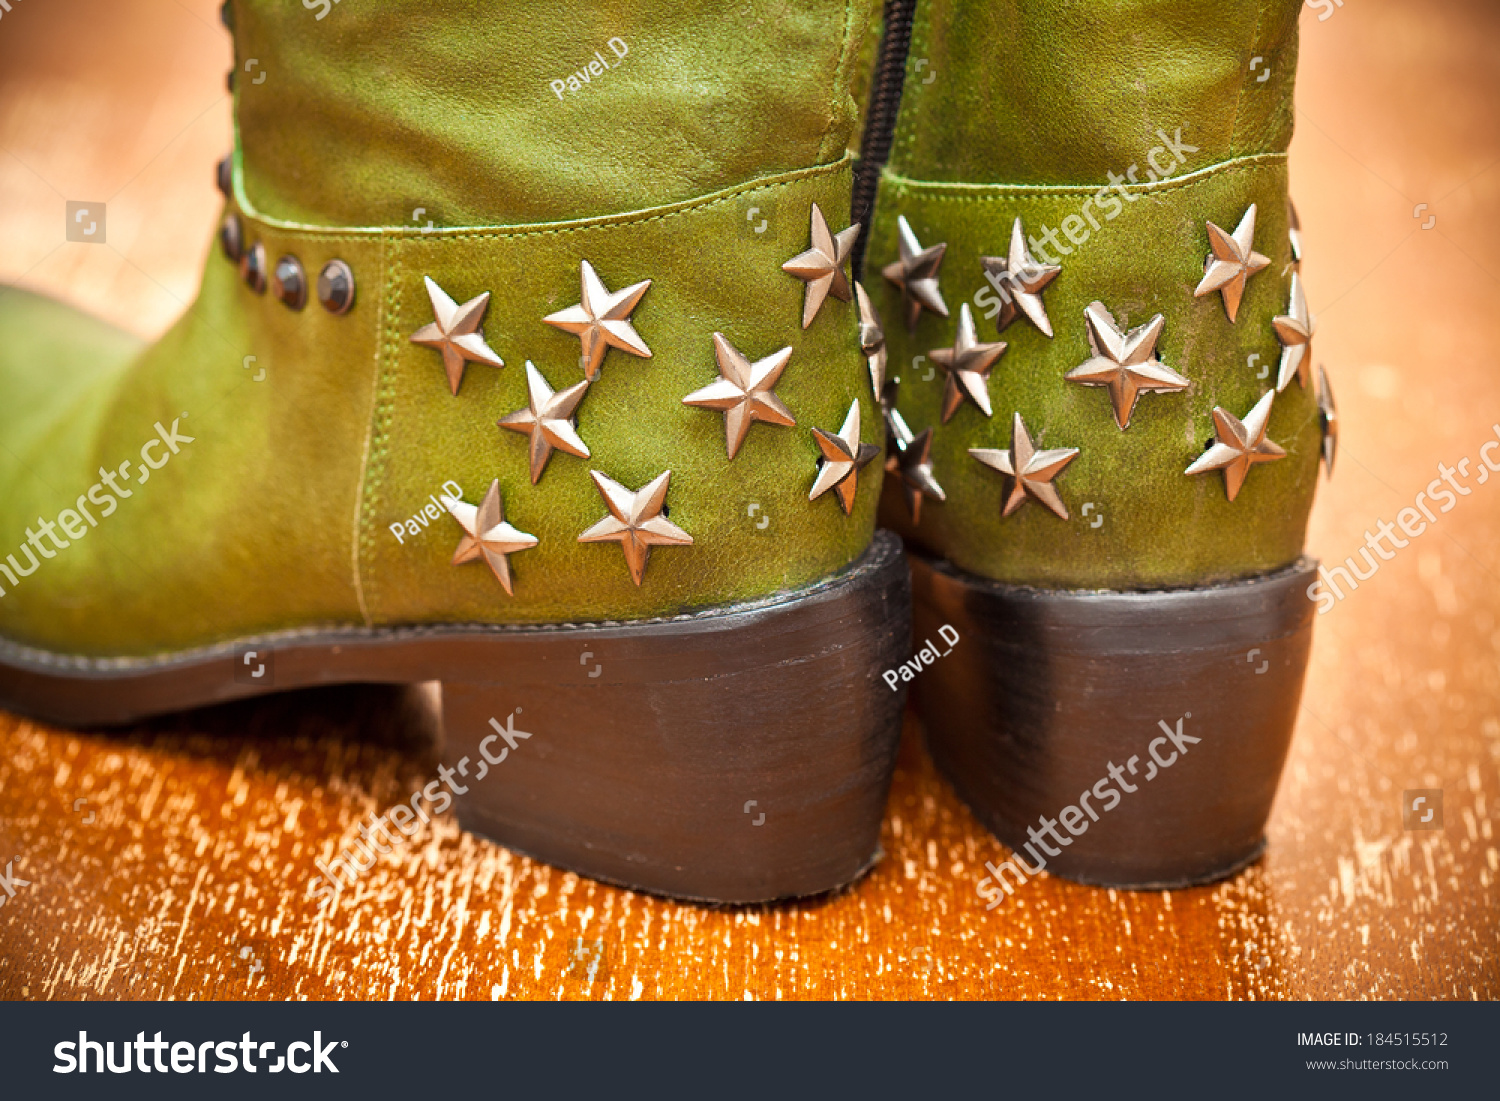 women's boots cowboy style